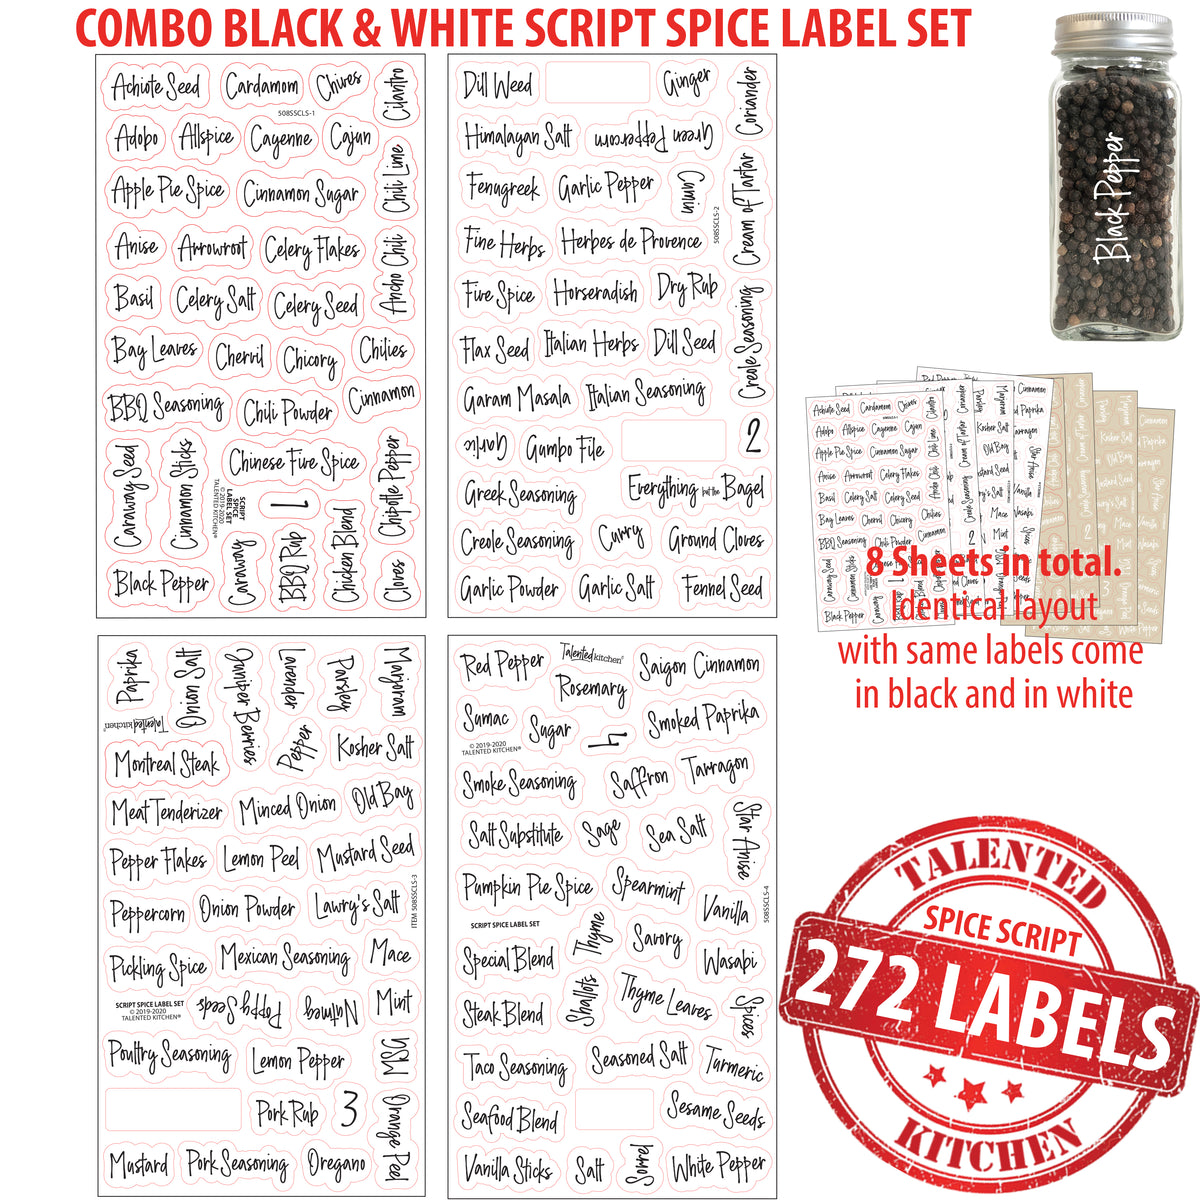 Cursive Spice Label Combo Set, 300 Black & White Labels – Talented Kitchen